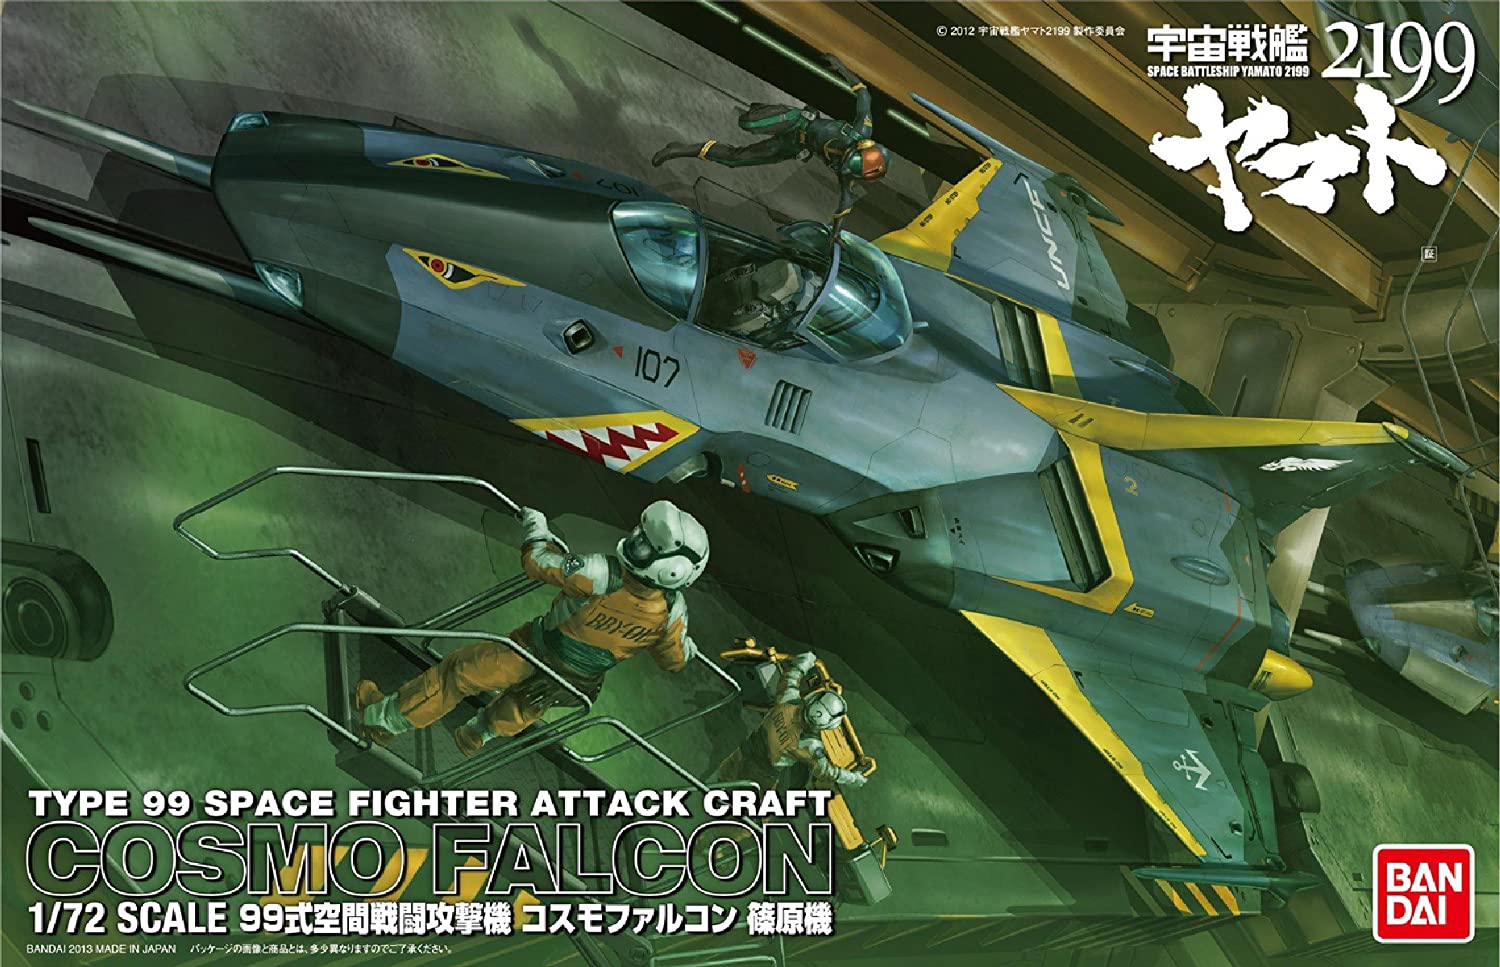 1w Delv Bandai Yamato 2202 Type 99 Space Fighter Attack Craft Cosmo Falcon for sale online 